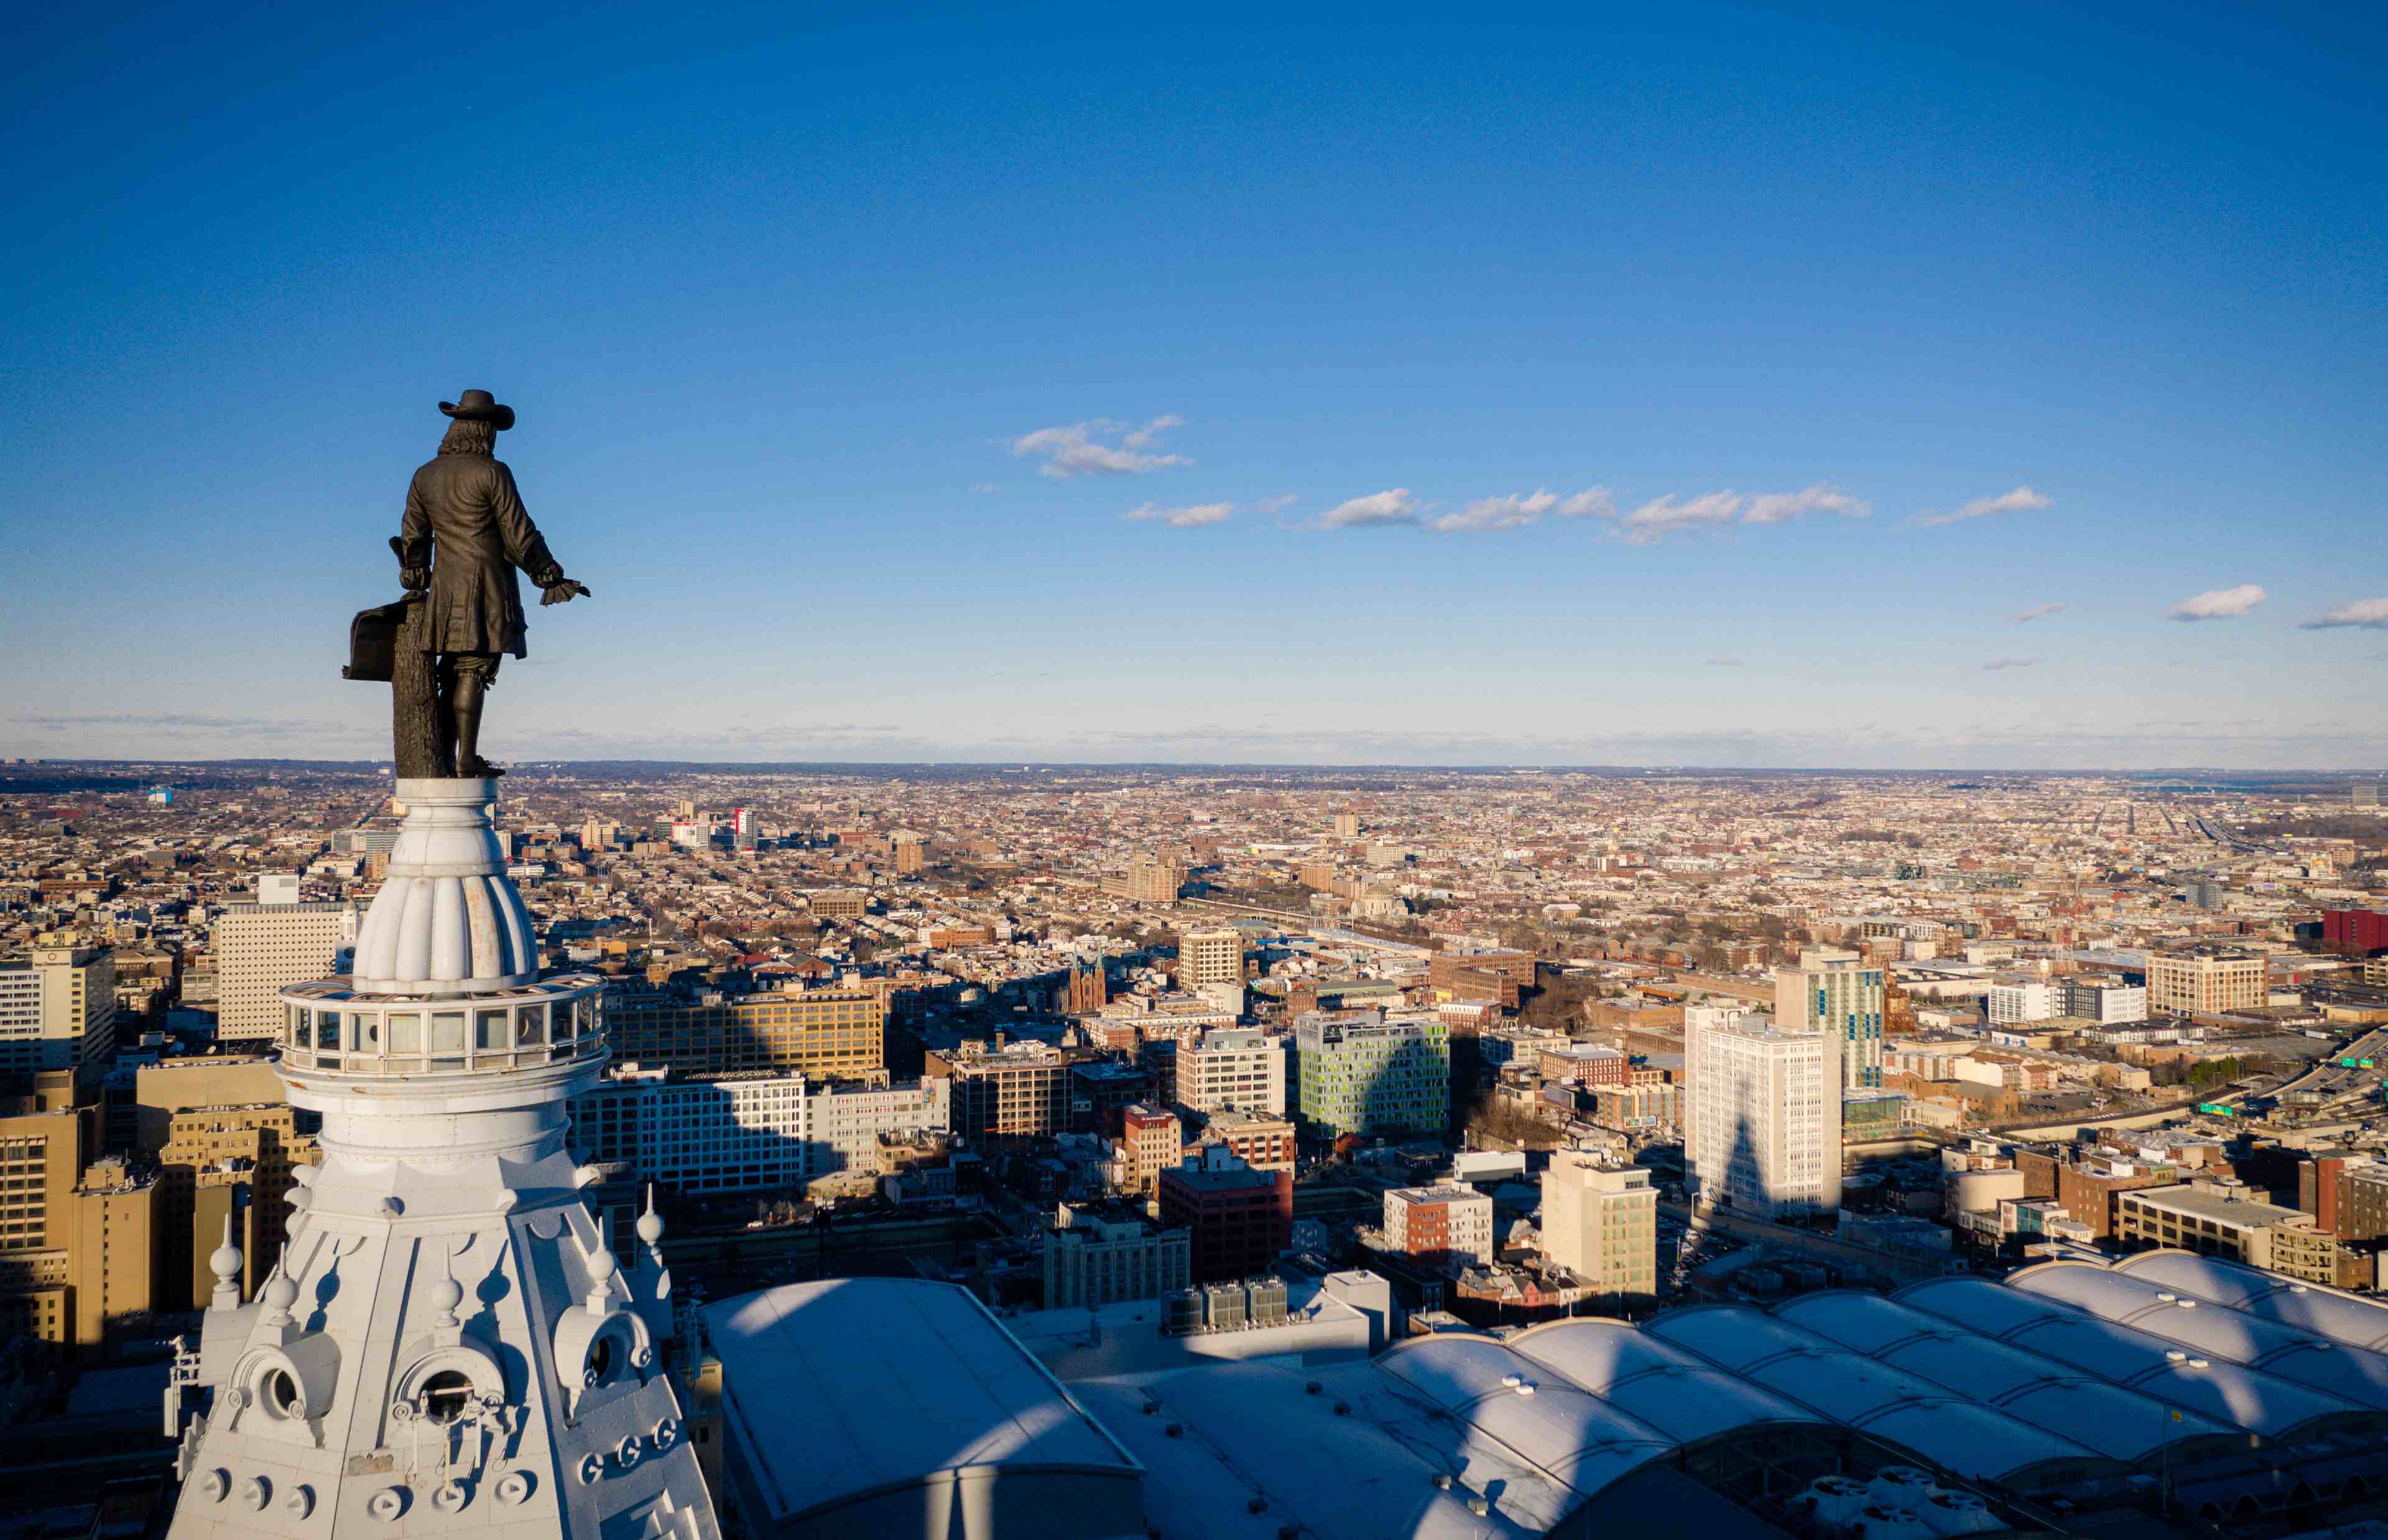 Statue of William Penn, Philadelphia